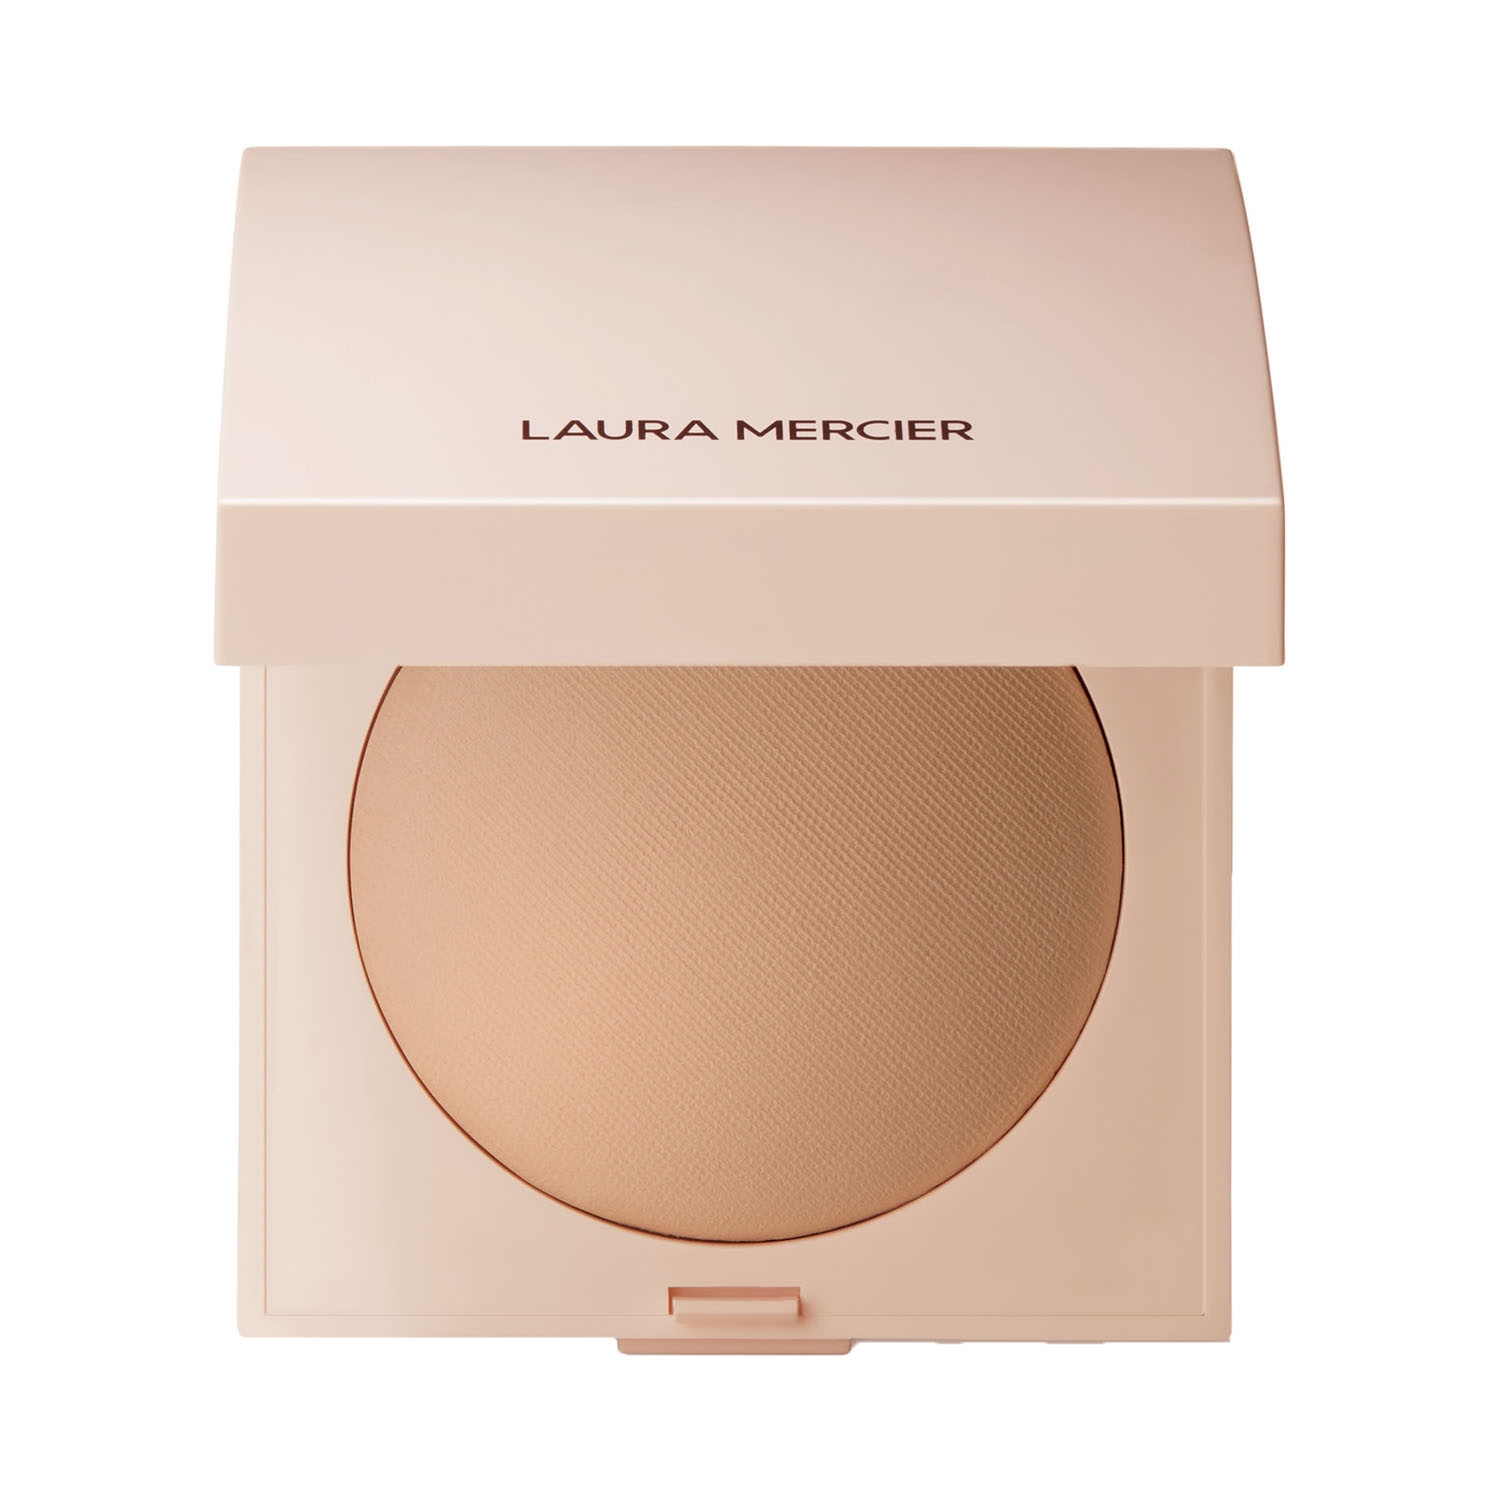 Laura Mercier | Laura Mercier Real Flawless Luminous Perfecting Pressed Powder - Translucent Medium (7g)